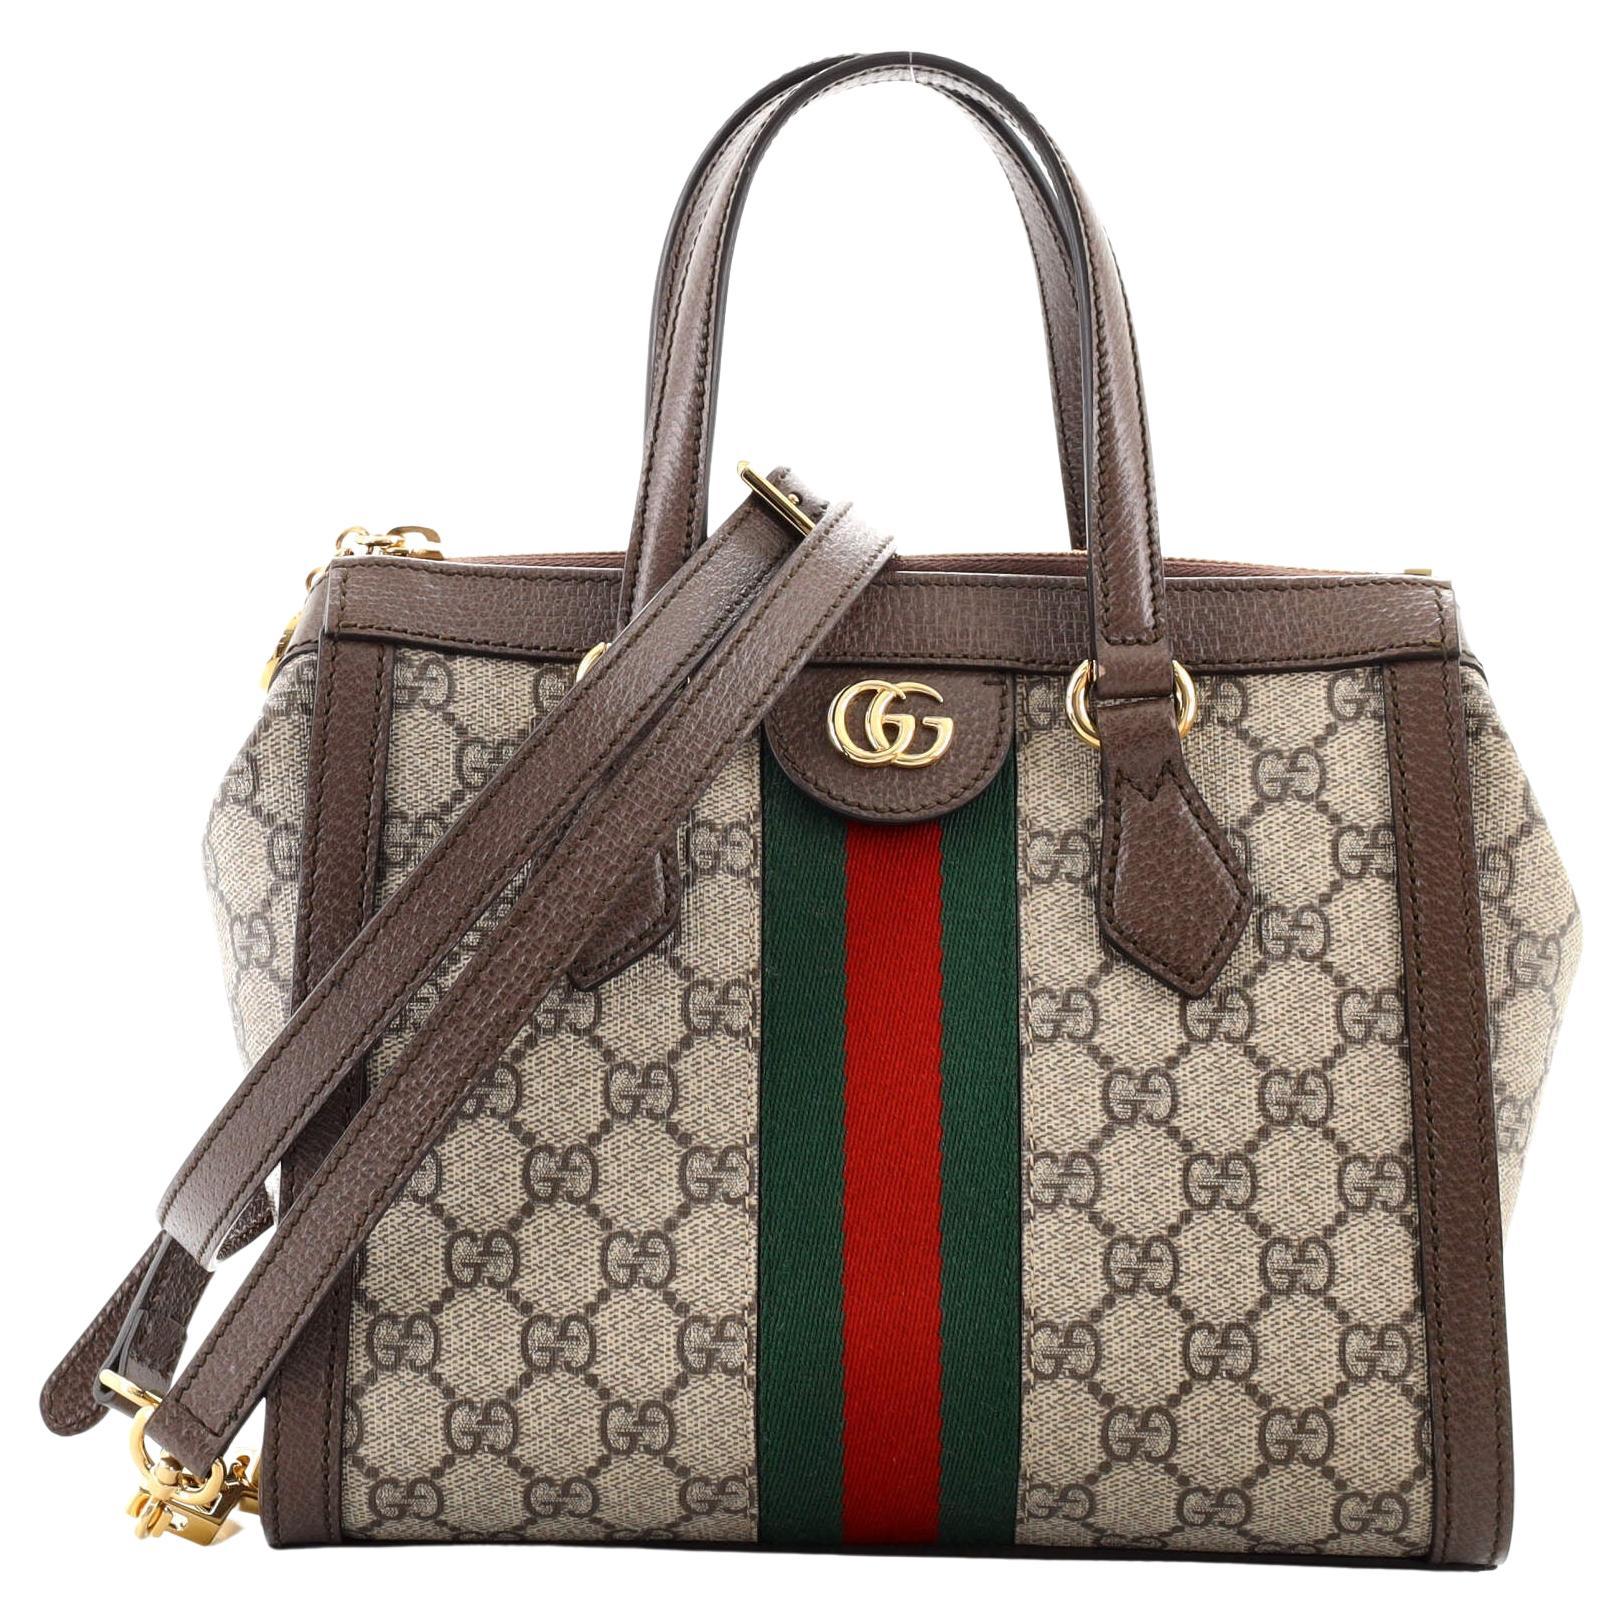 Gucci Ophidia Small GG Tote Bag